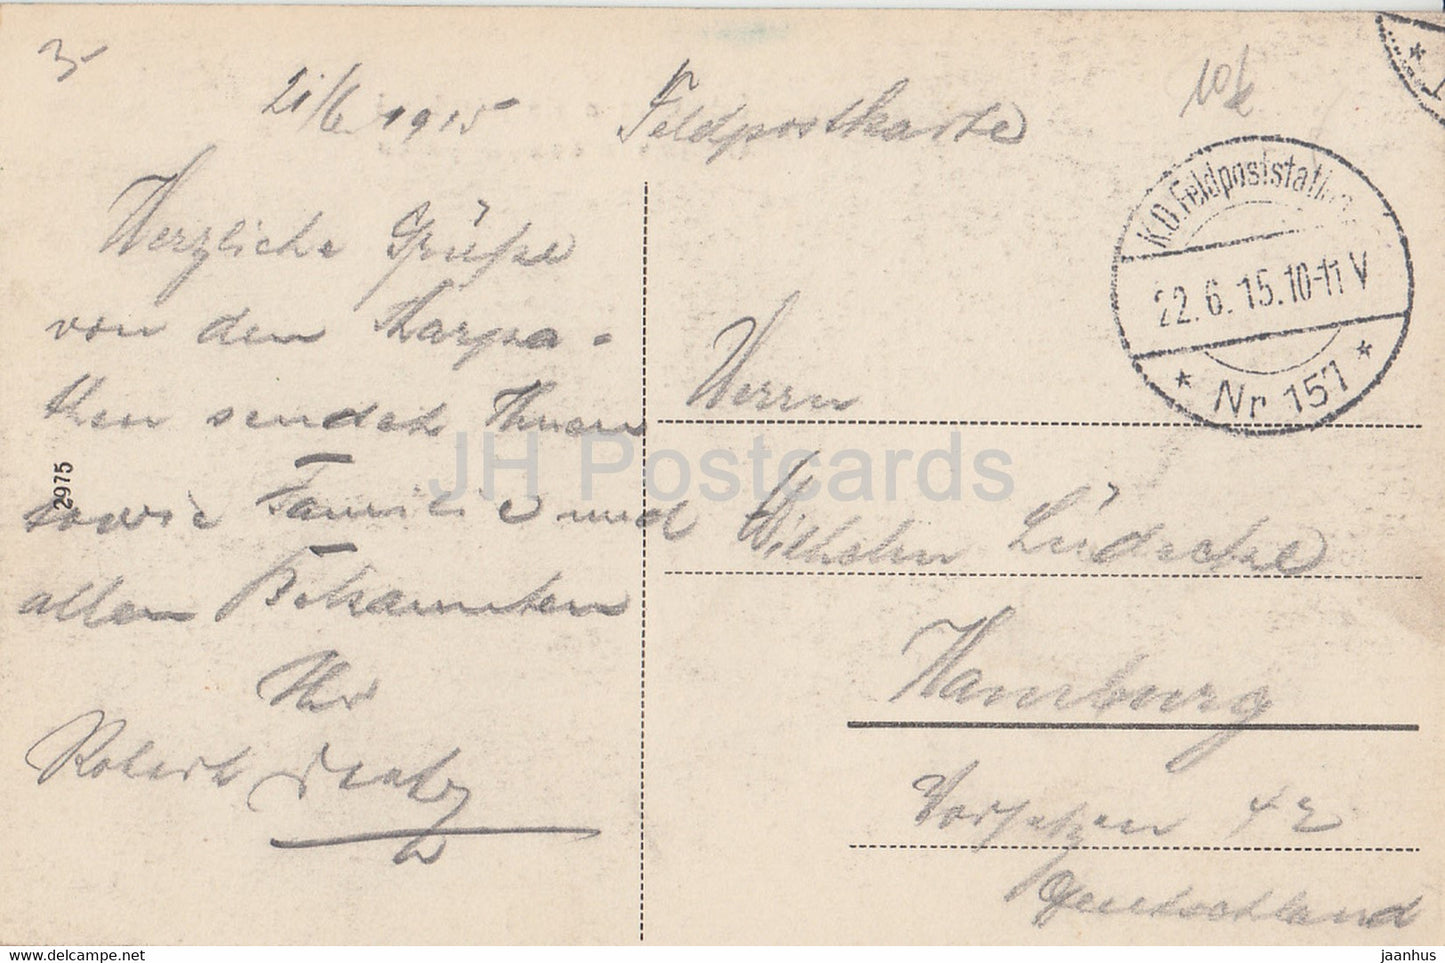 Udvozlet a Karpatokbol - Gruss von den Karpaten - Carpathian - Feldpost - old postcard - 1915 - Hungary - used